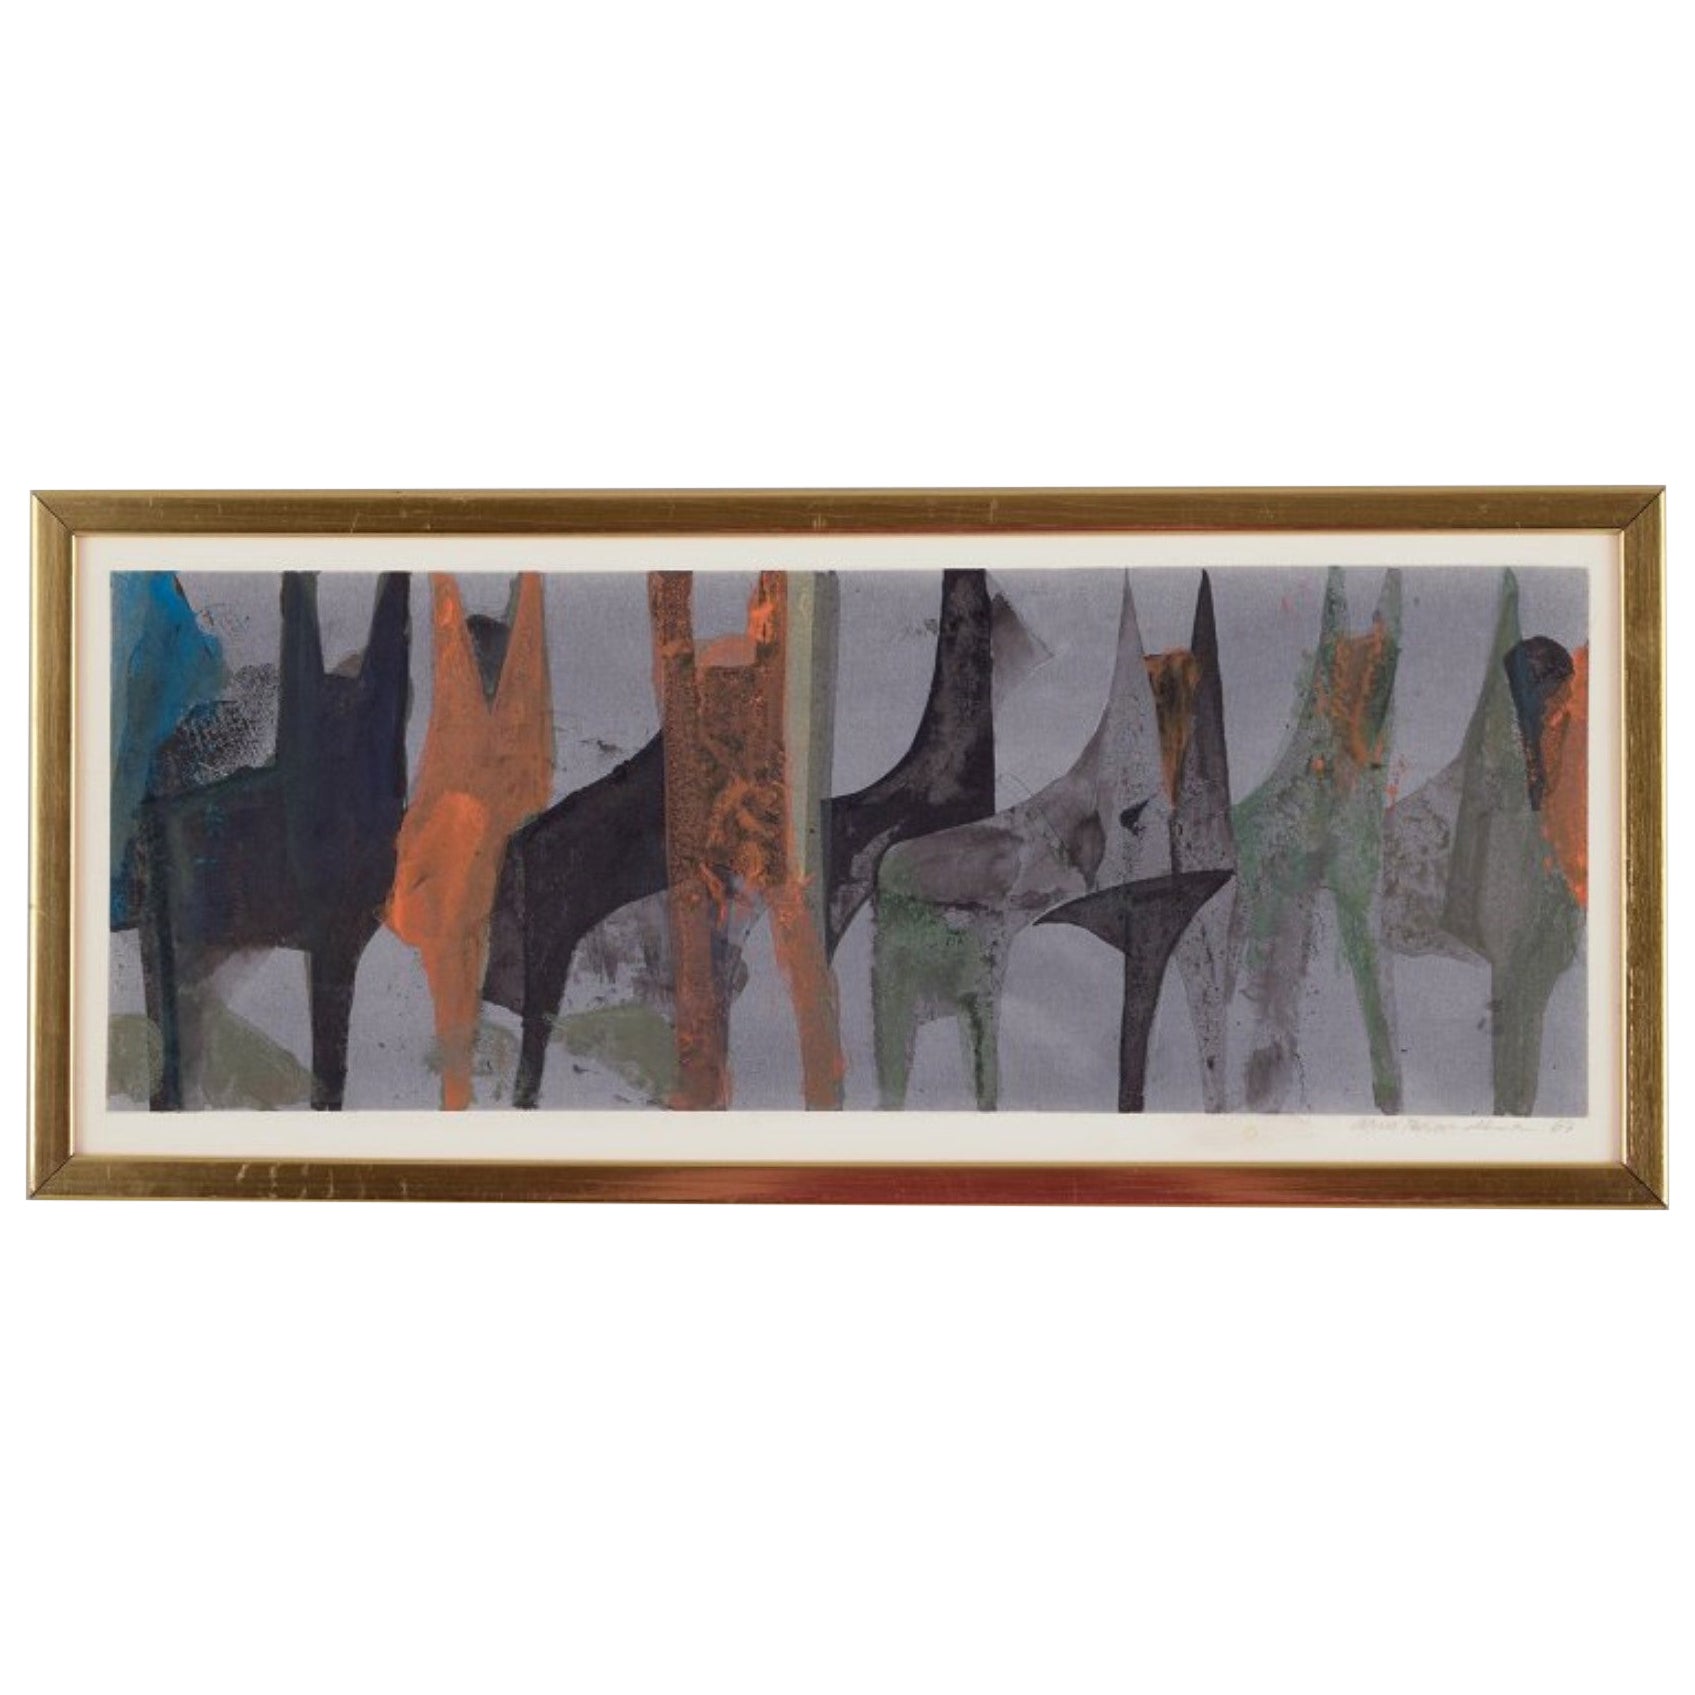 Arne Brandtman, Swedish artist. Color print on paper. Abstract composition.